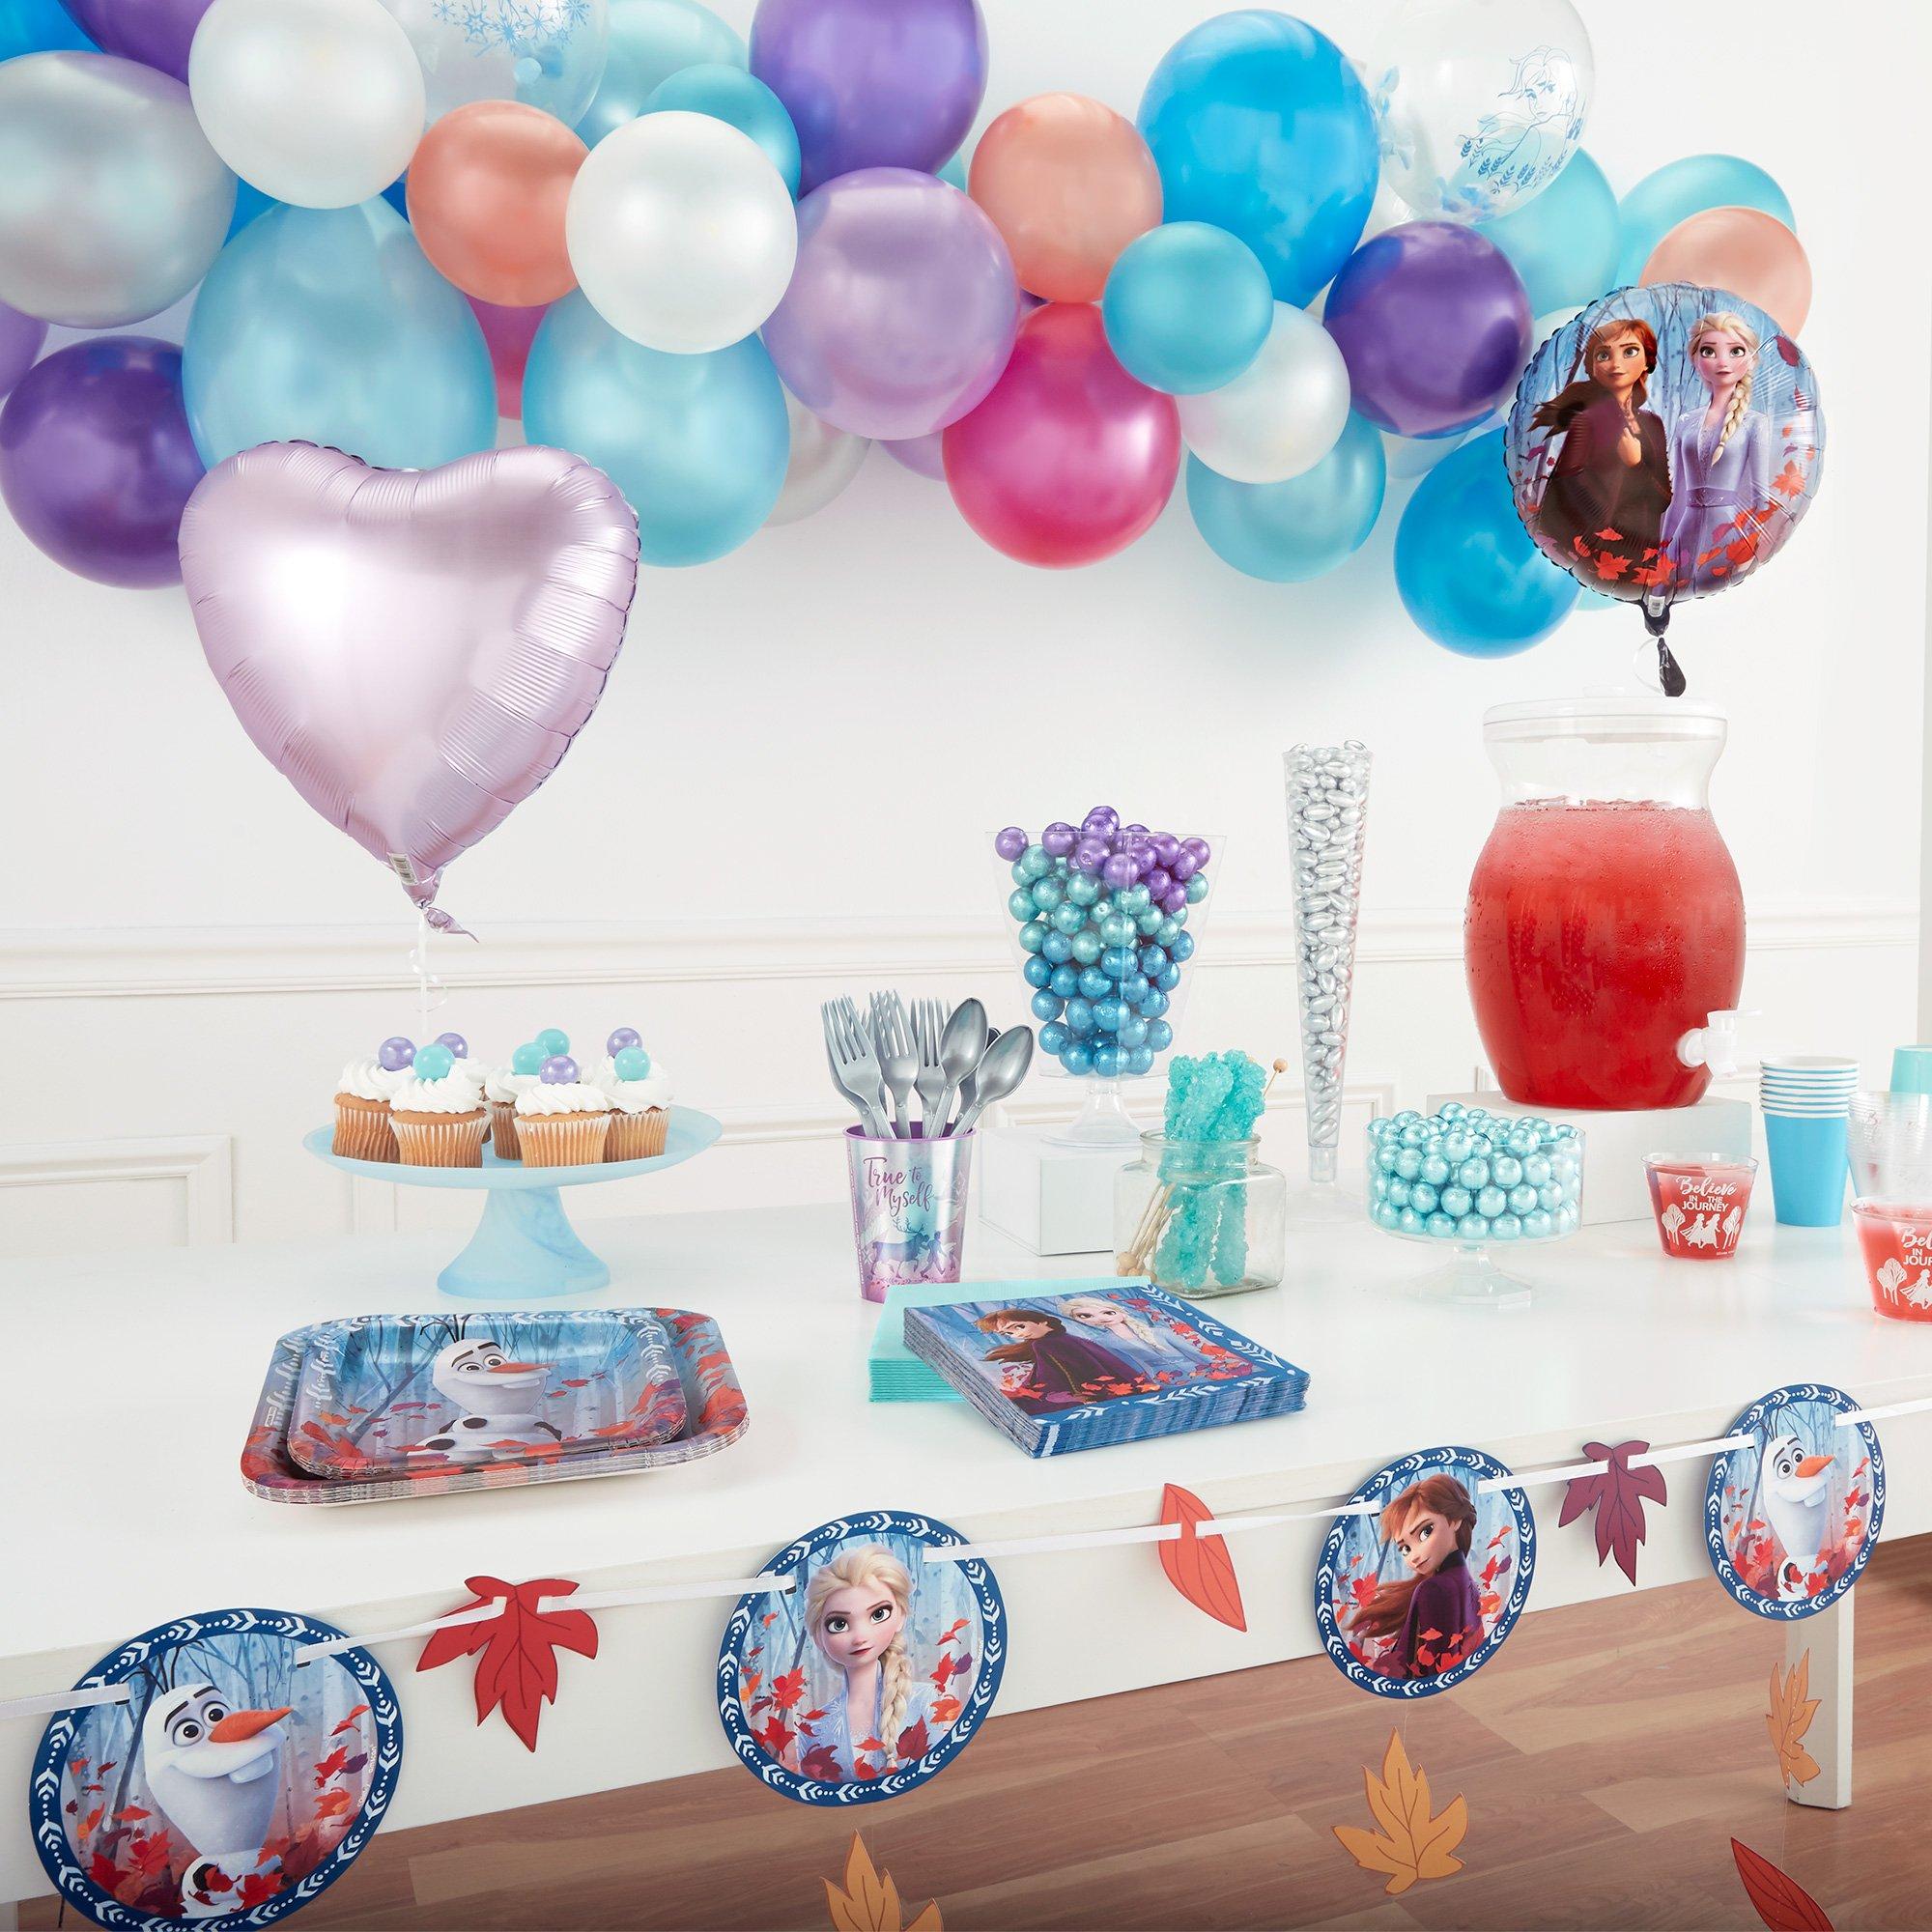 Encanto birthday party decoration, Mirabel birthday party supplies, Encanto  bottle label, cupcake, chip bags, Lollipop, Chocolate Label